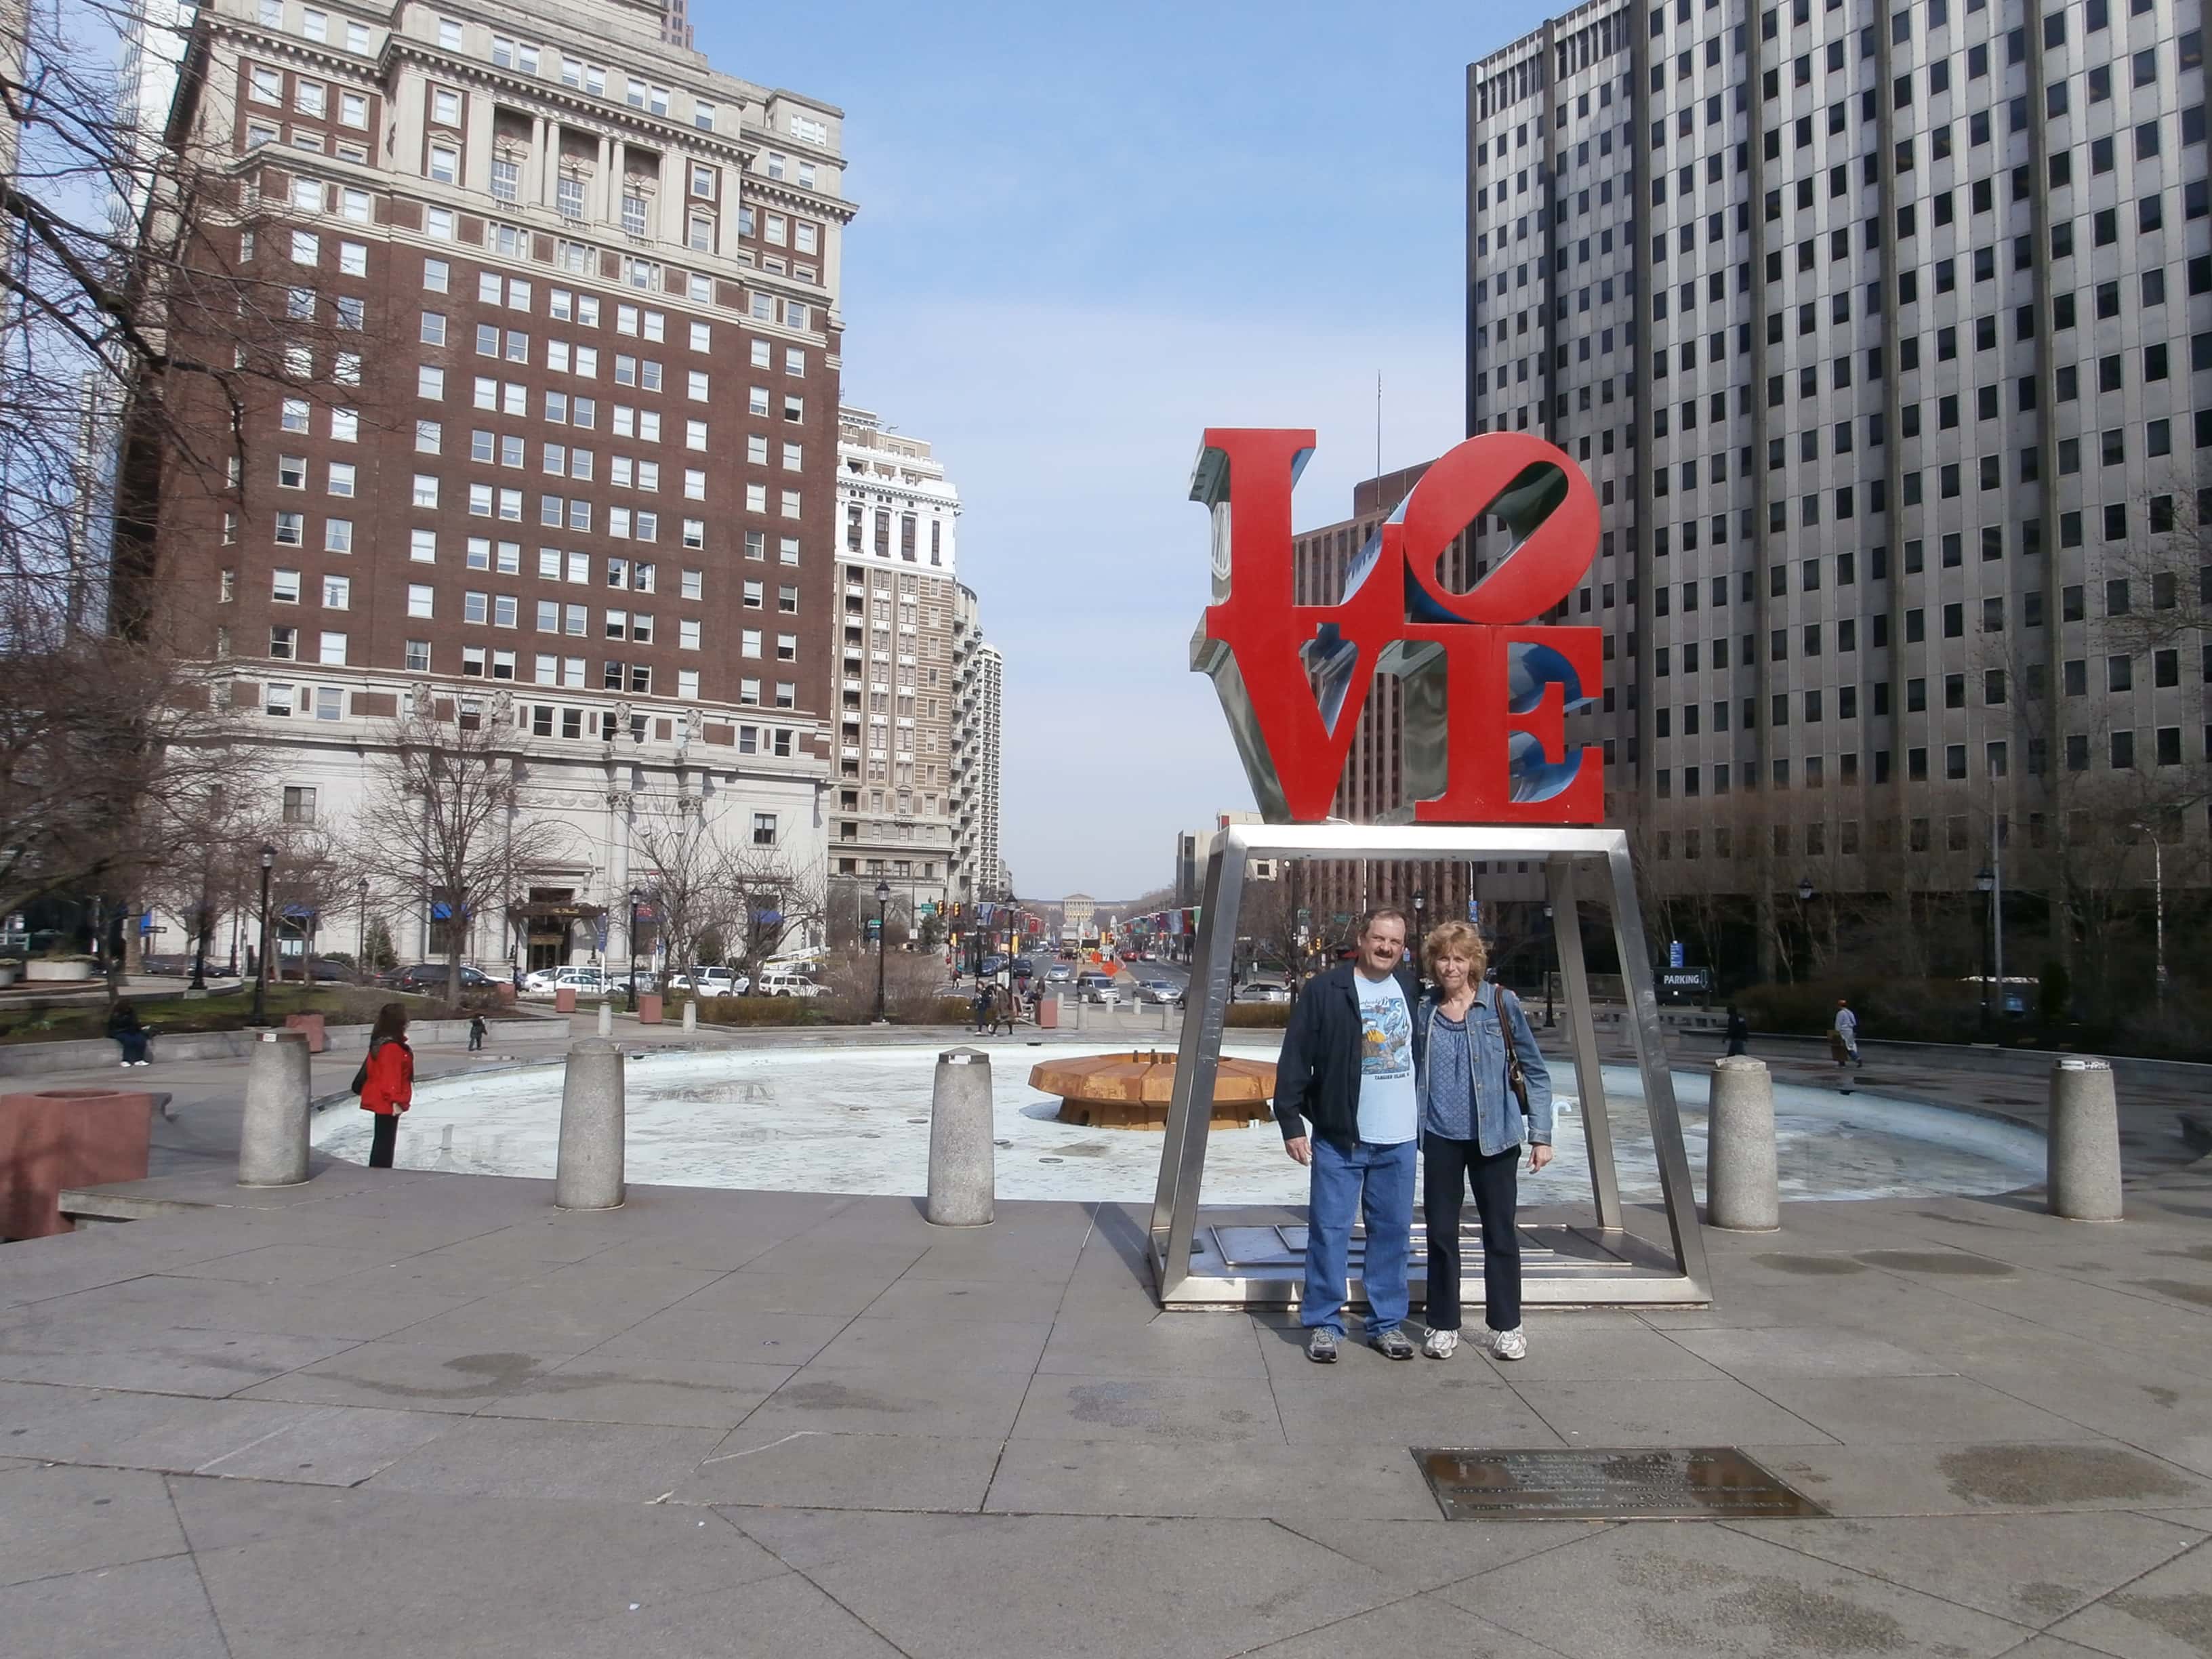 LOVE Statue in Philadelphia, Pennsylvania - Wayne and Cathy